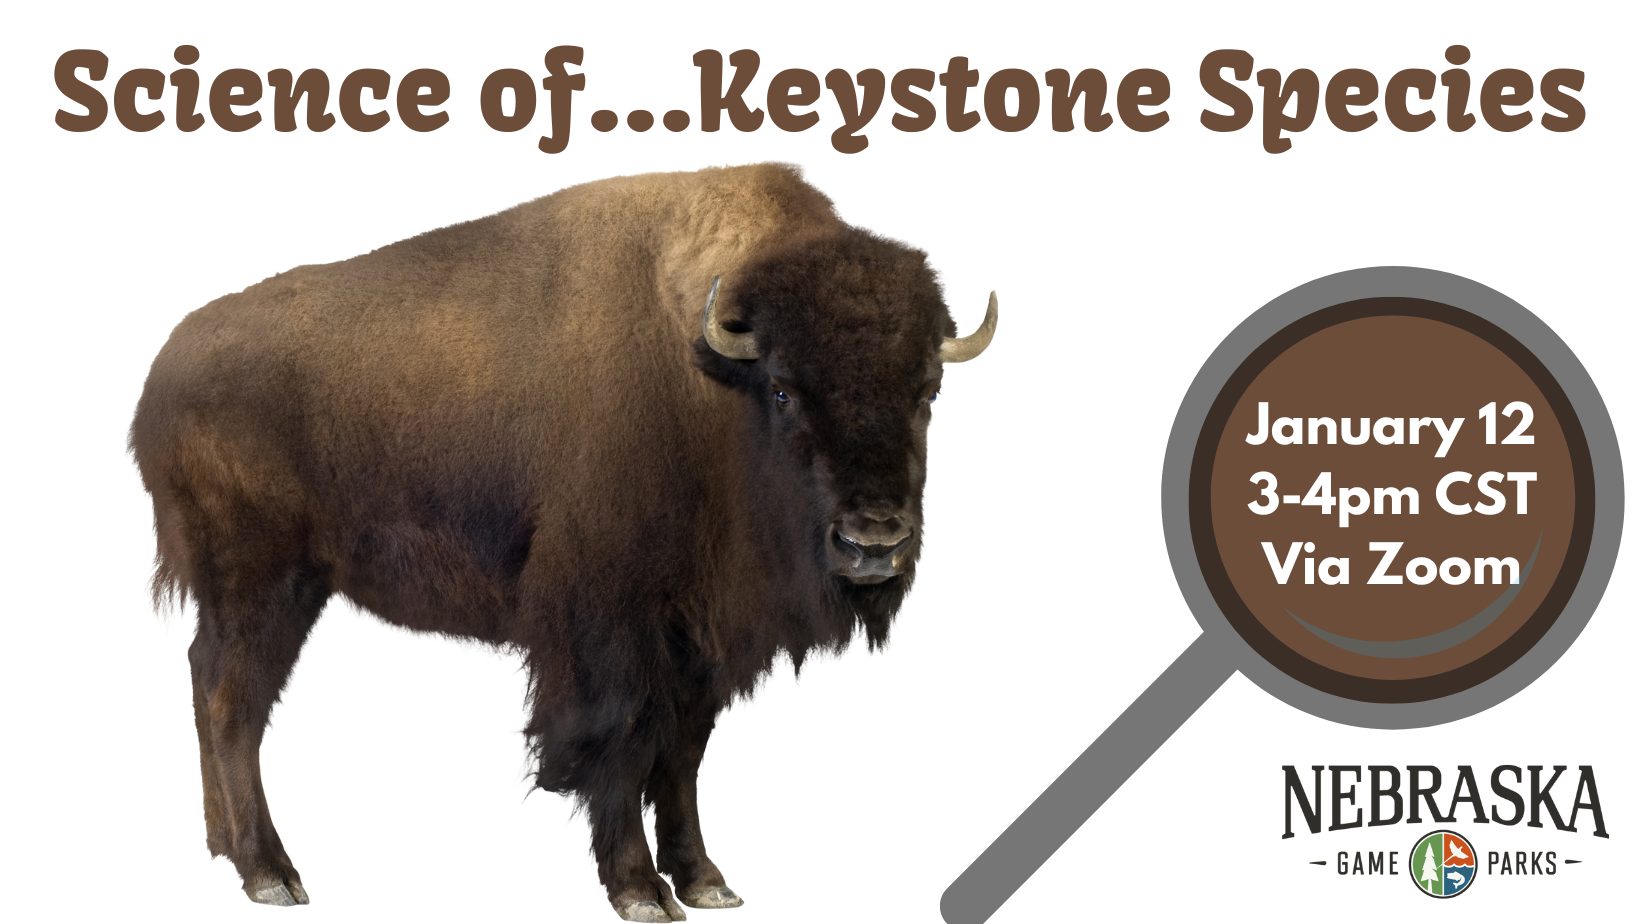 Keystone Species